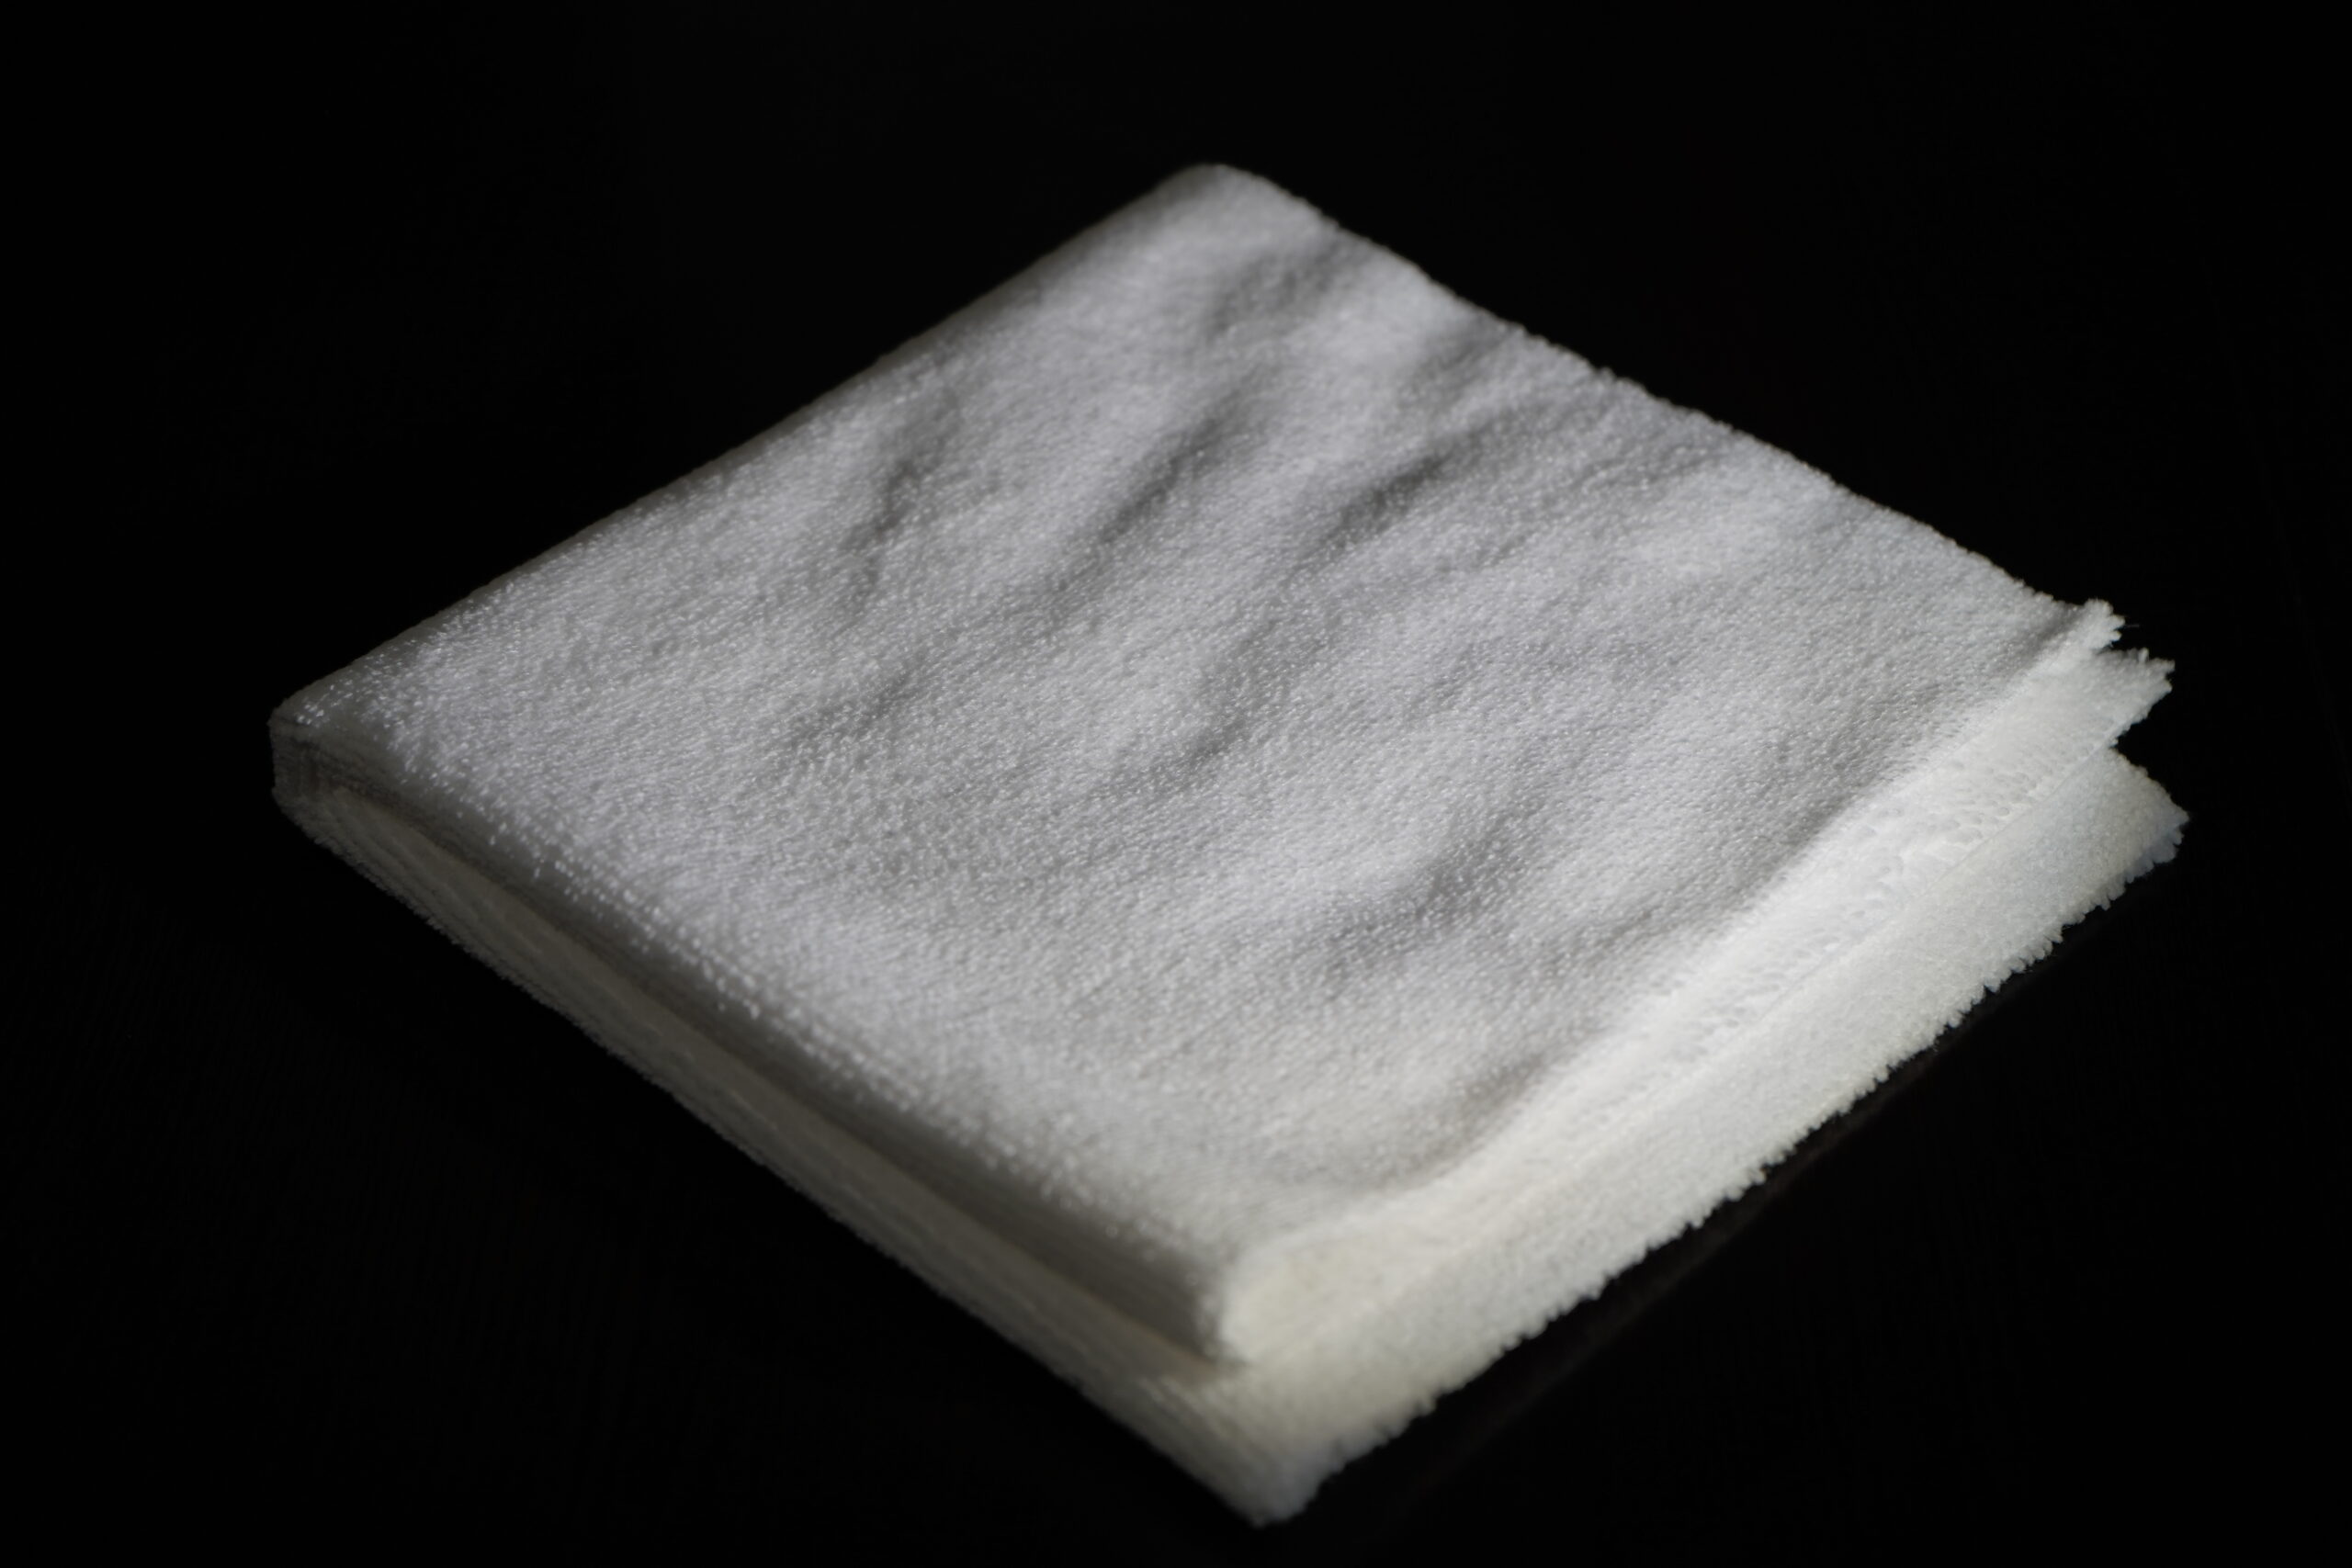 Elite Edgeless Microfiber Towels - 5-Pack